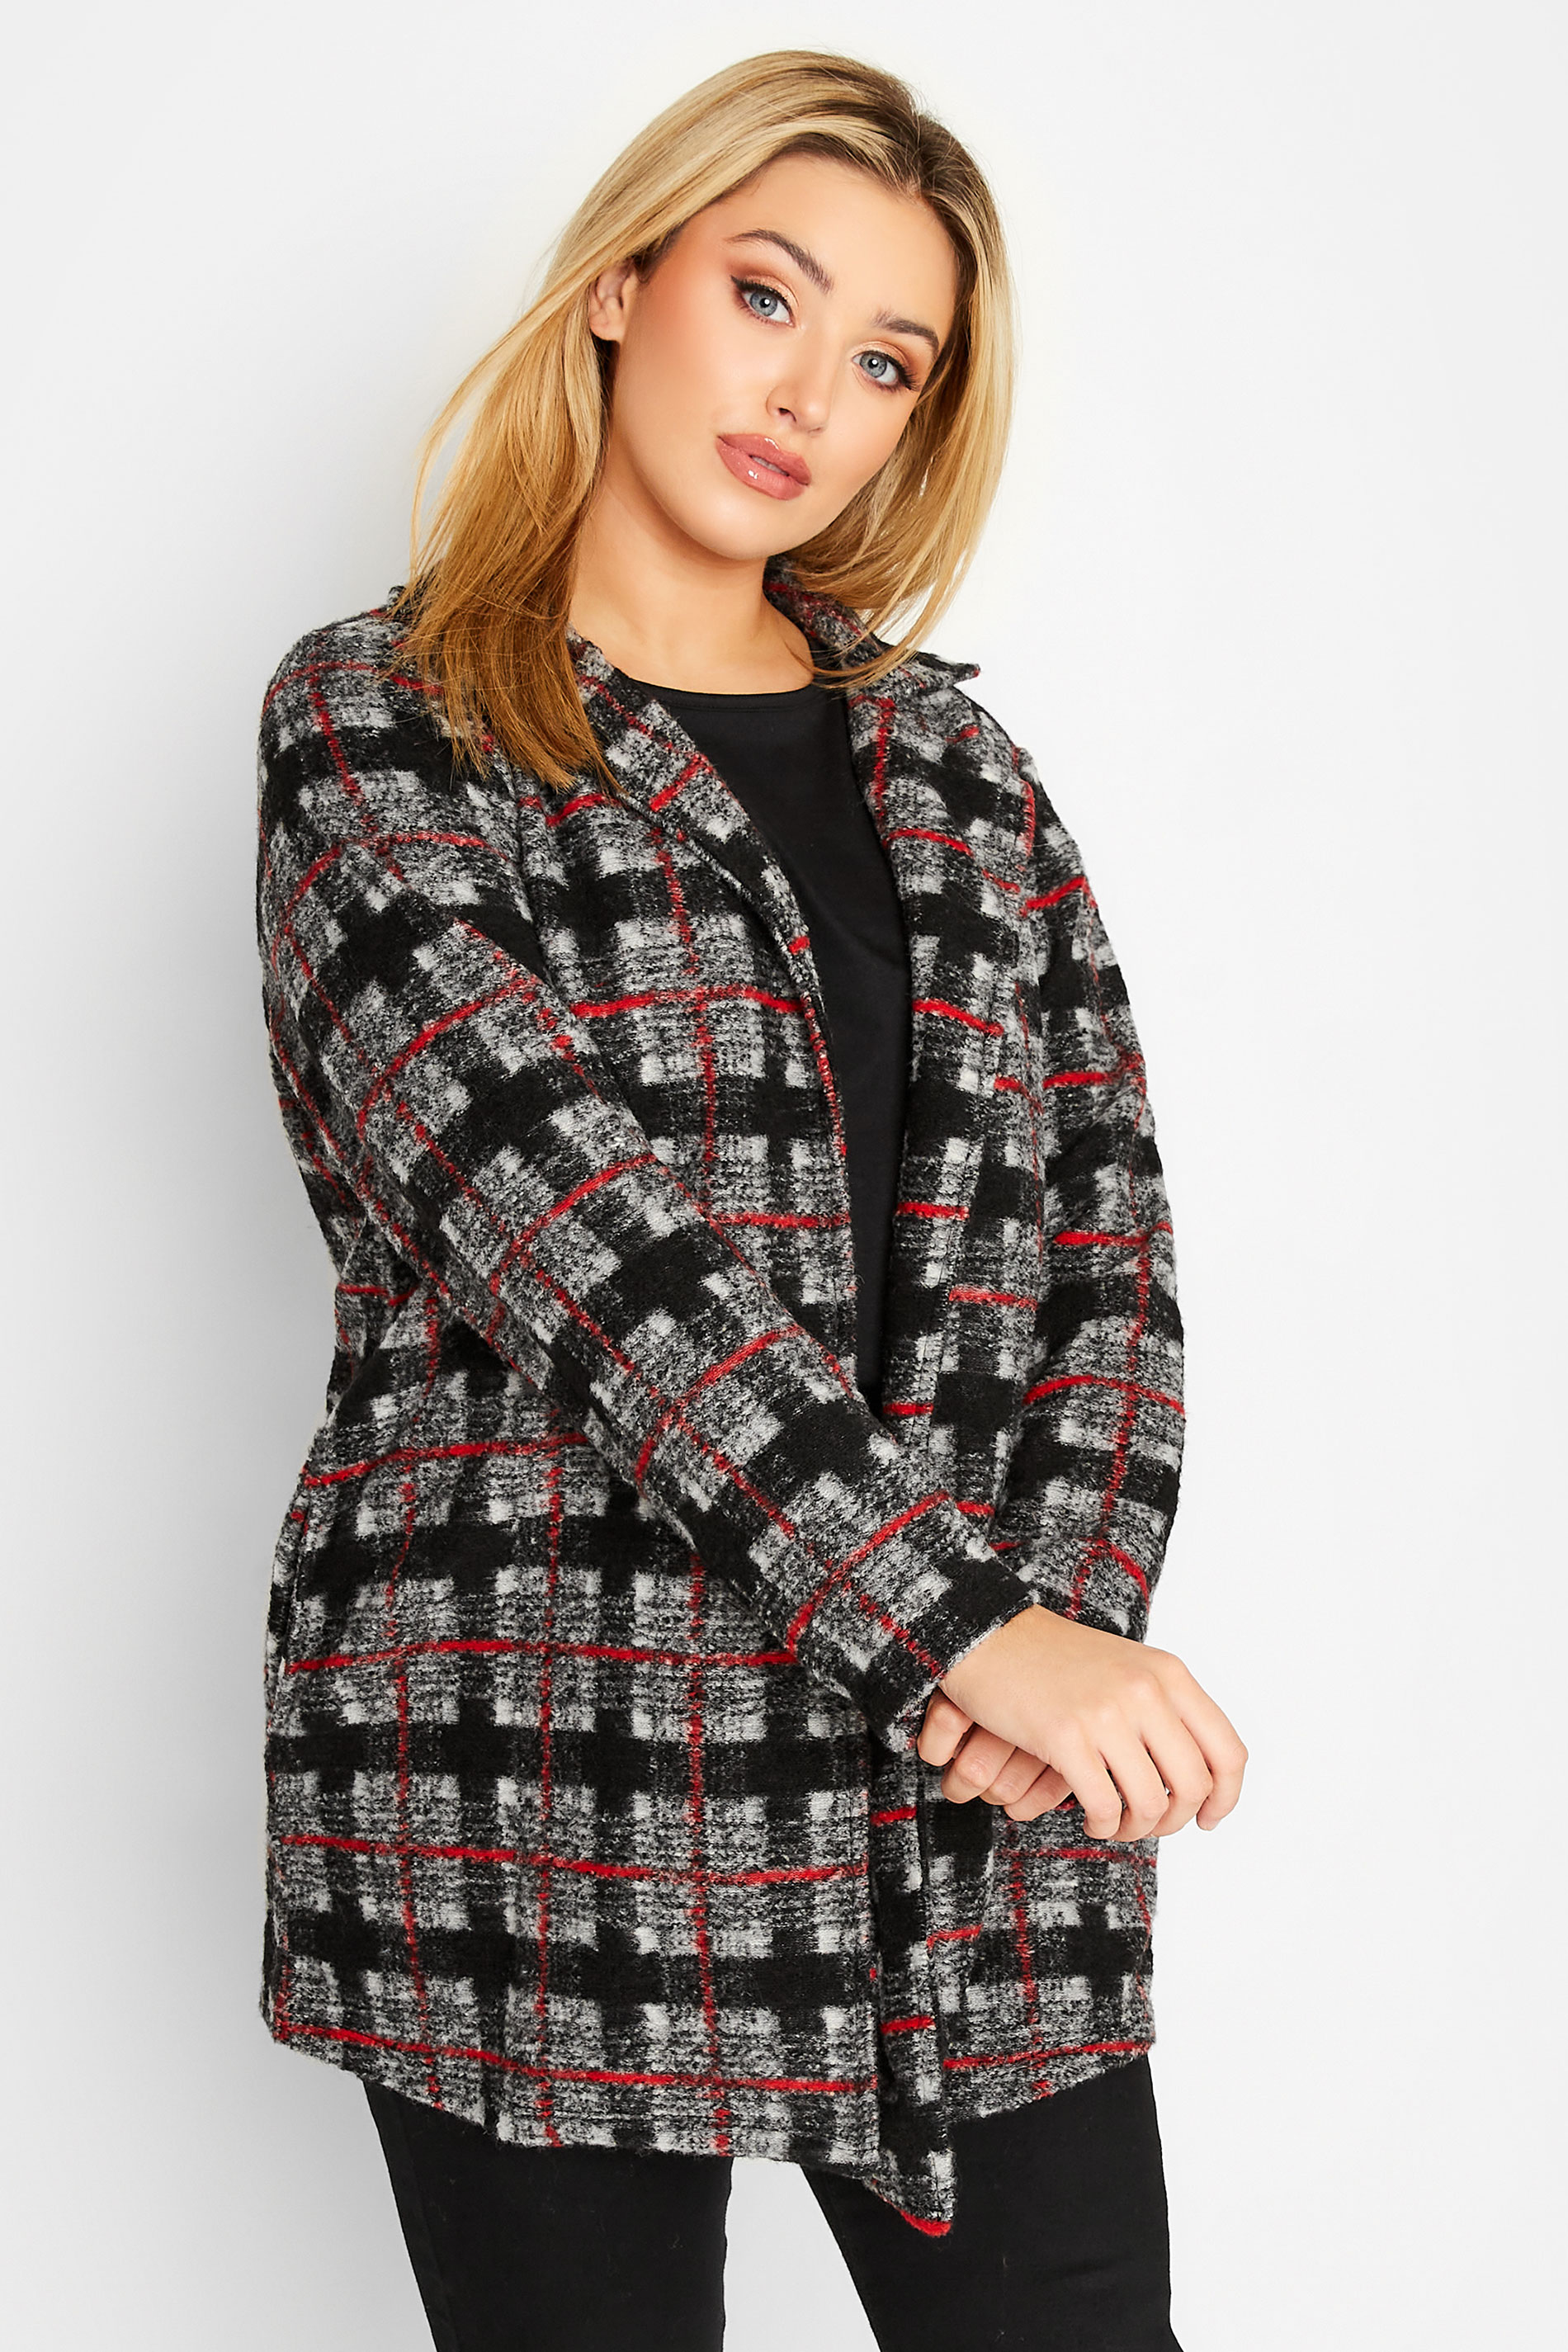 YOURS LUXURY Plus Size Black Check Print Fleece Jacket | Yours Clothing 1